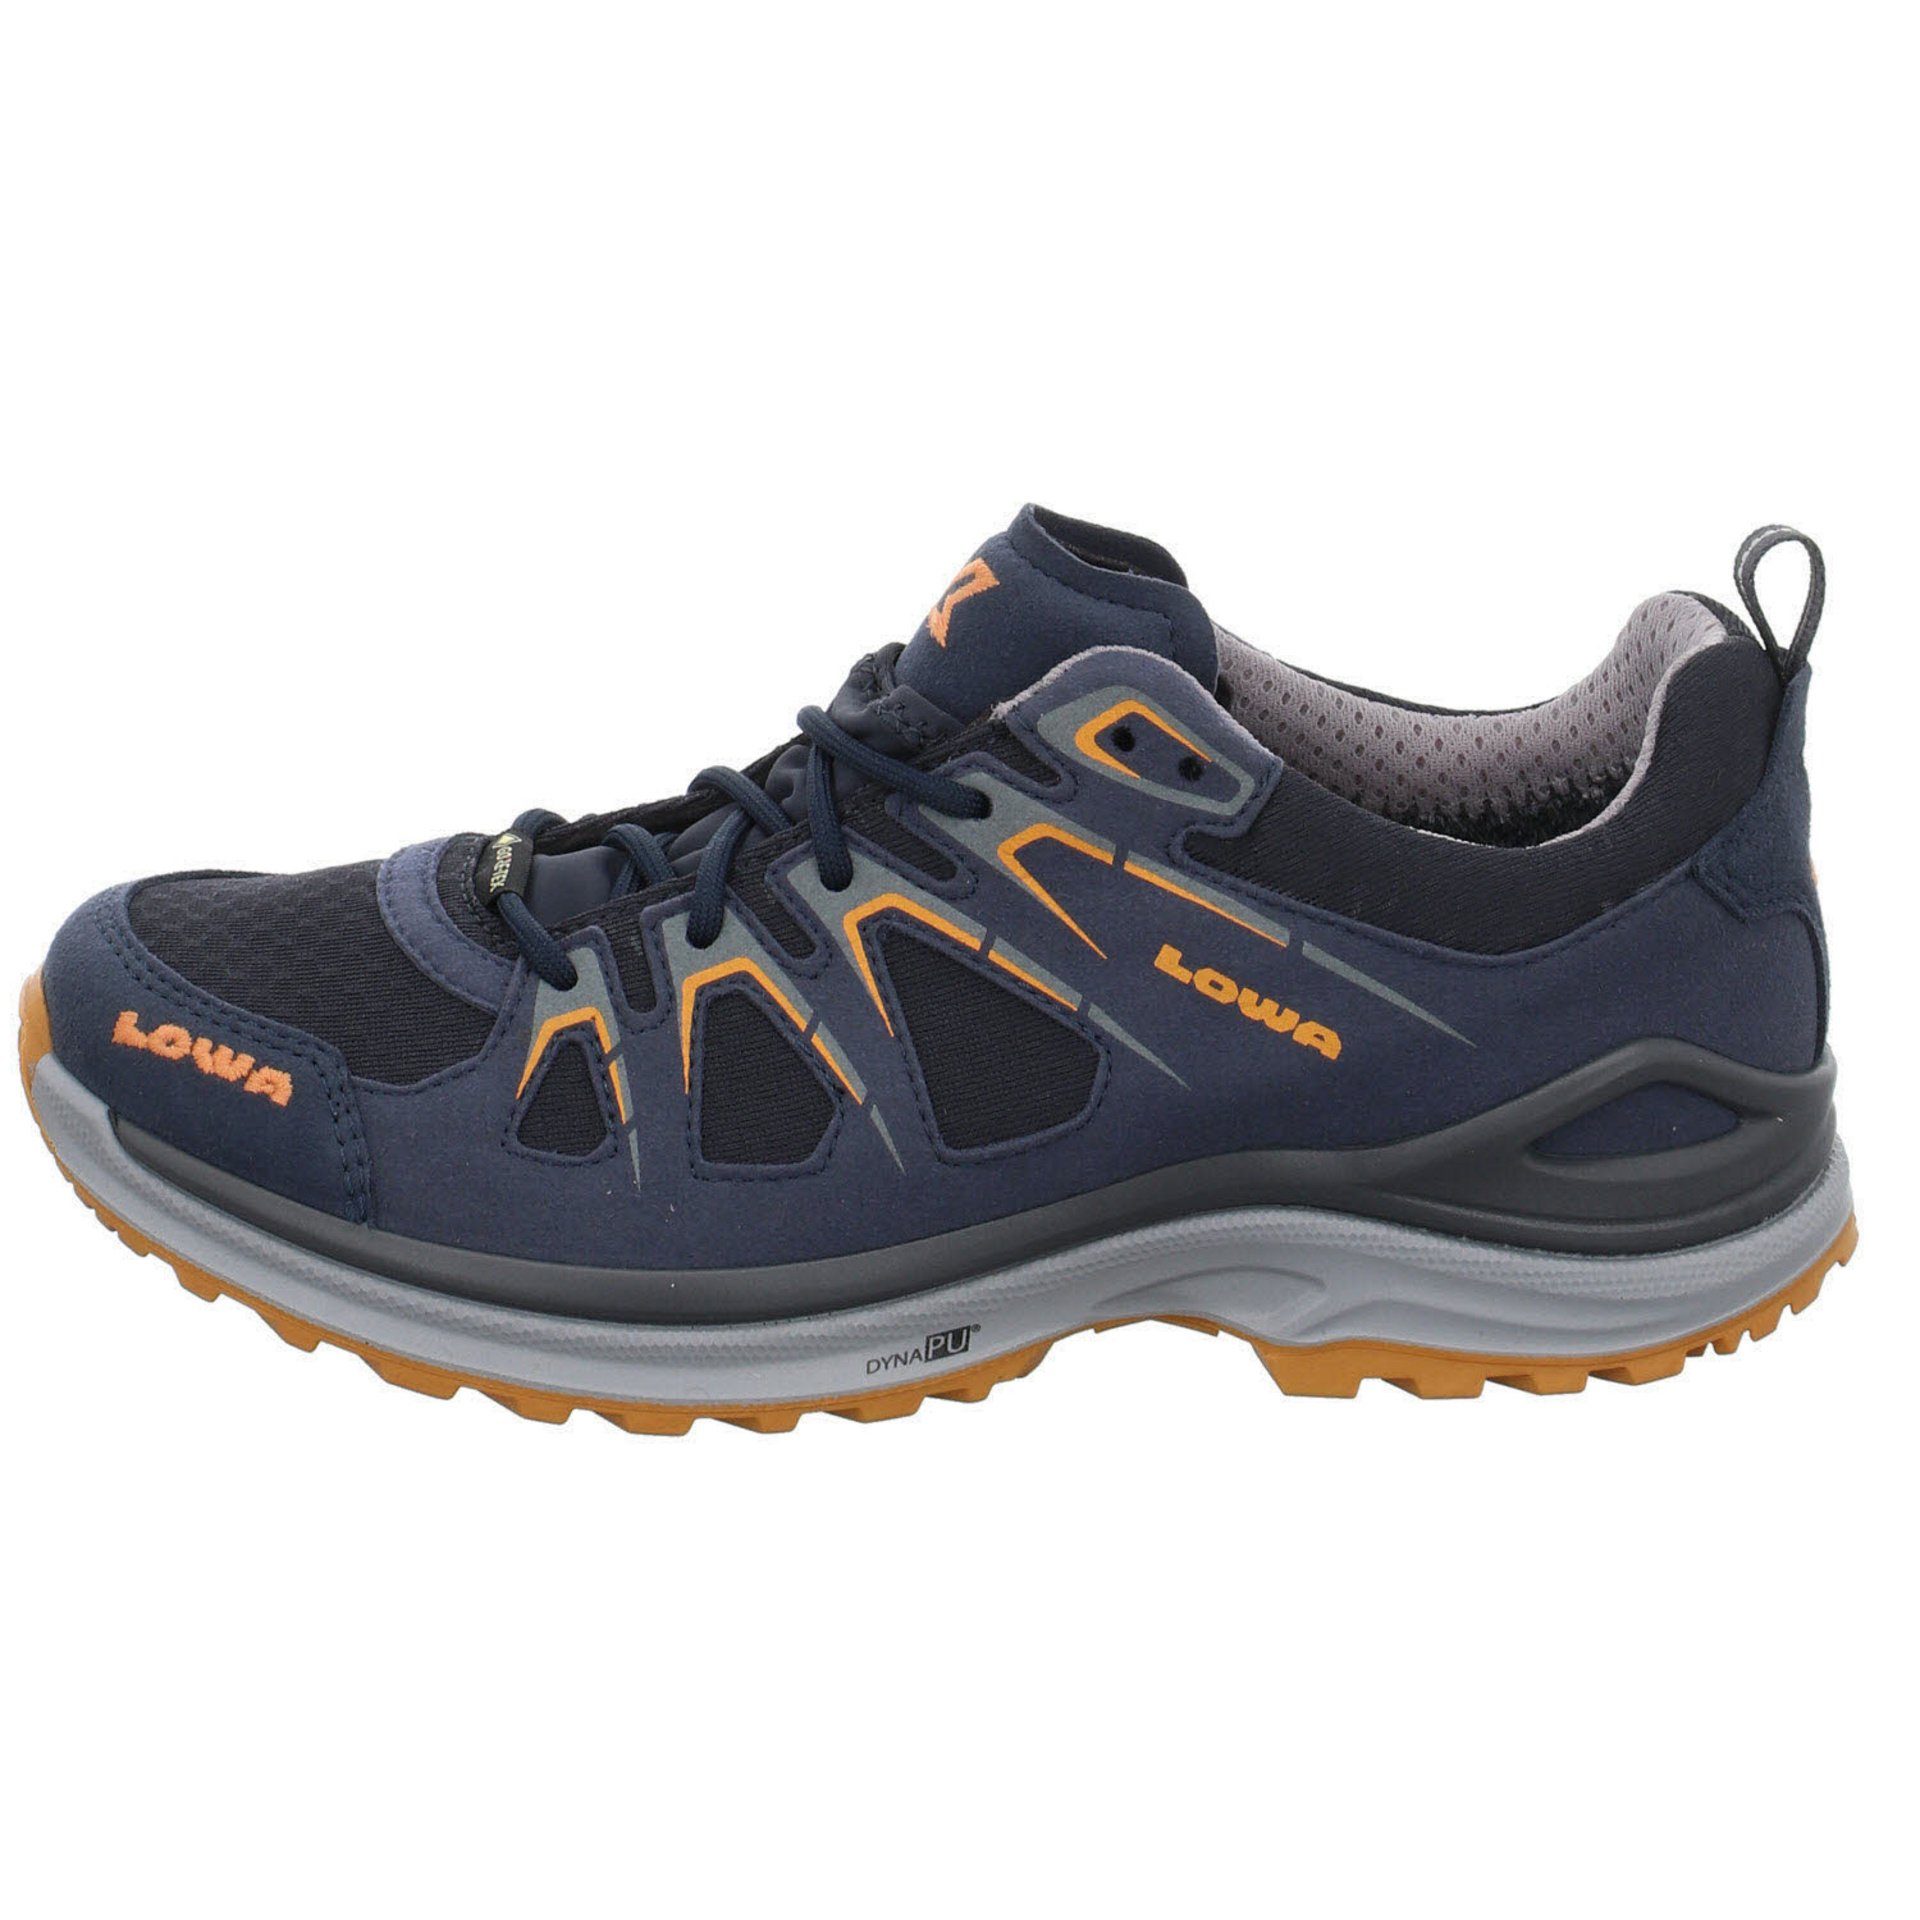 Synthetikkombination Schuhe EVO stahlblau/marine Lowa Outdoorschuh Outdoorschuh Lo Damen Innox Outdoor